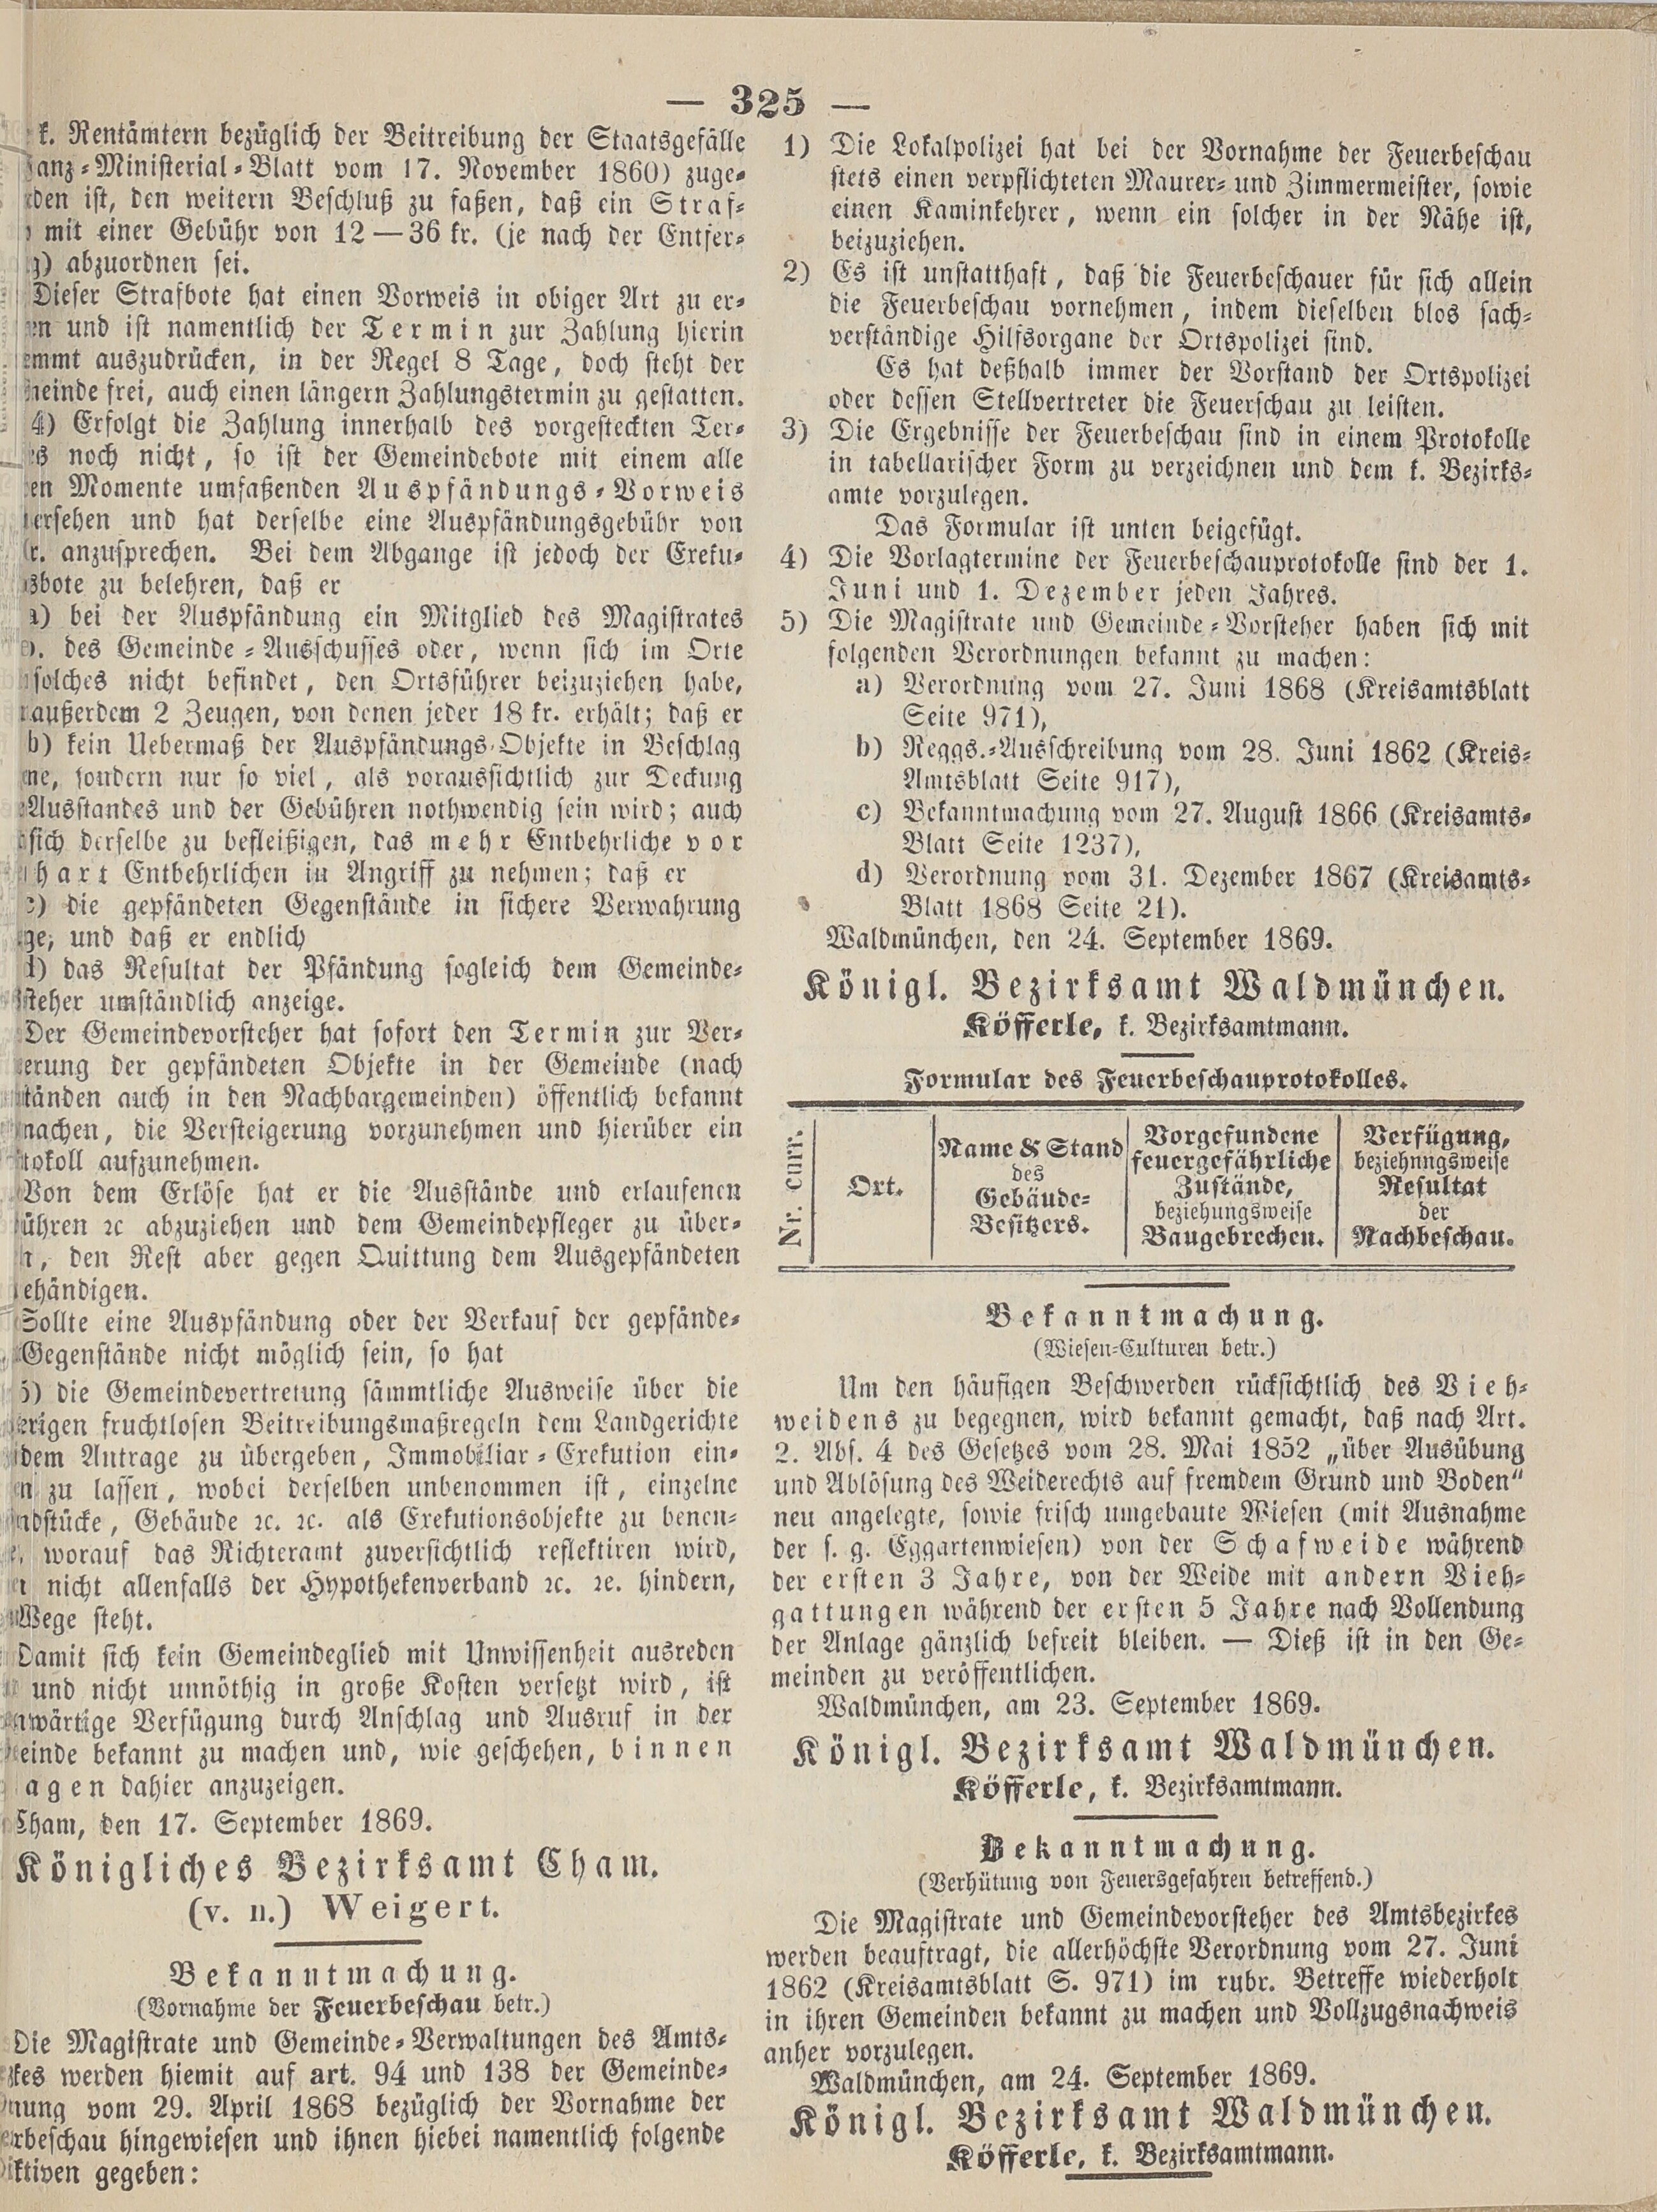 3. neunburger-bezirksamtsblatt-1869-09-29-n78_3280